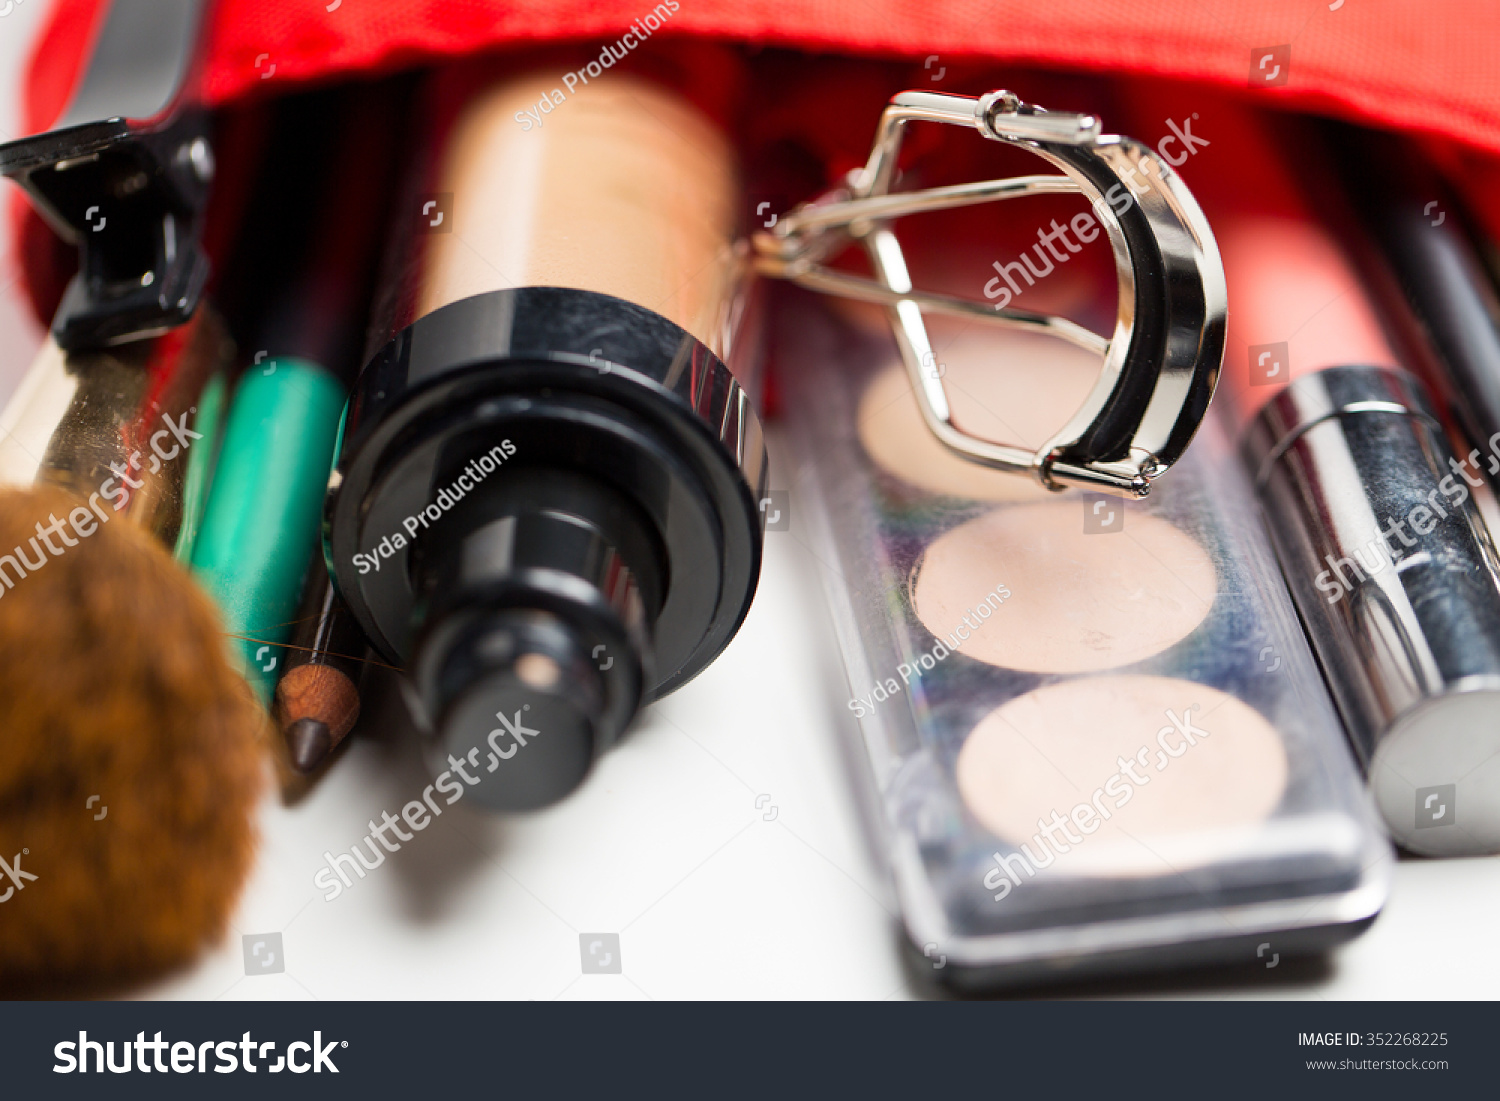 PowerPoint Template: cosmetics-makeup-and-beauty-concept (kmjjnpjjm)